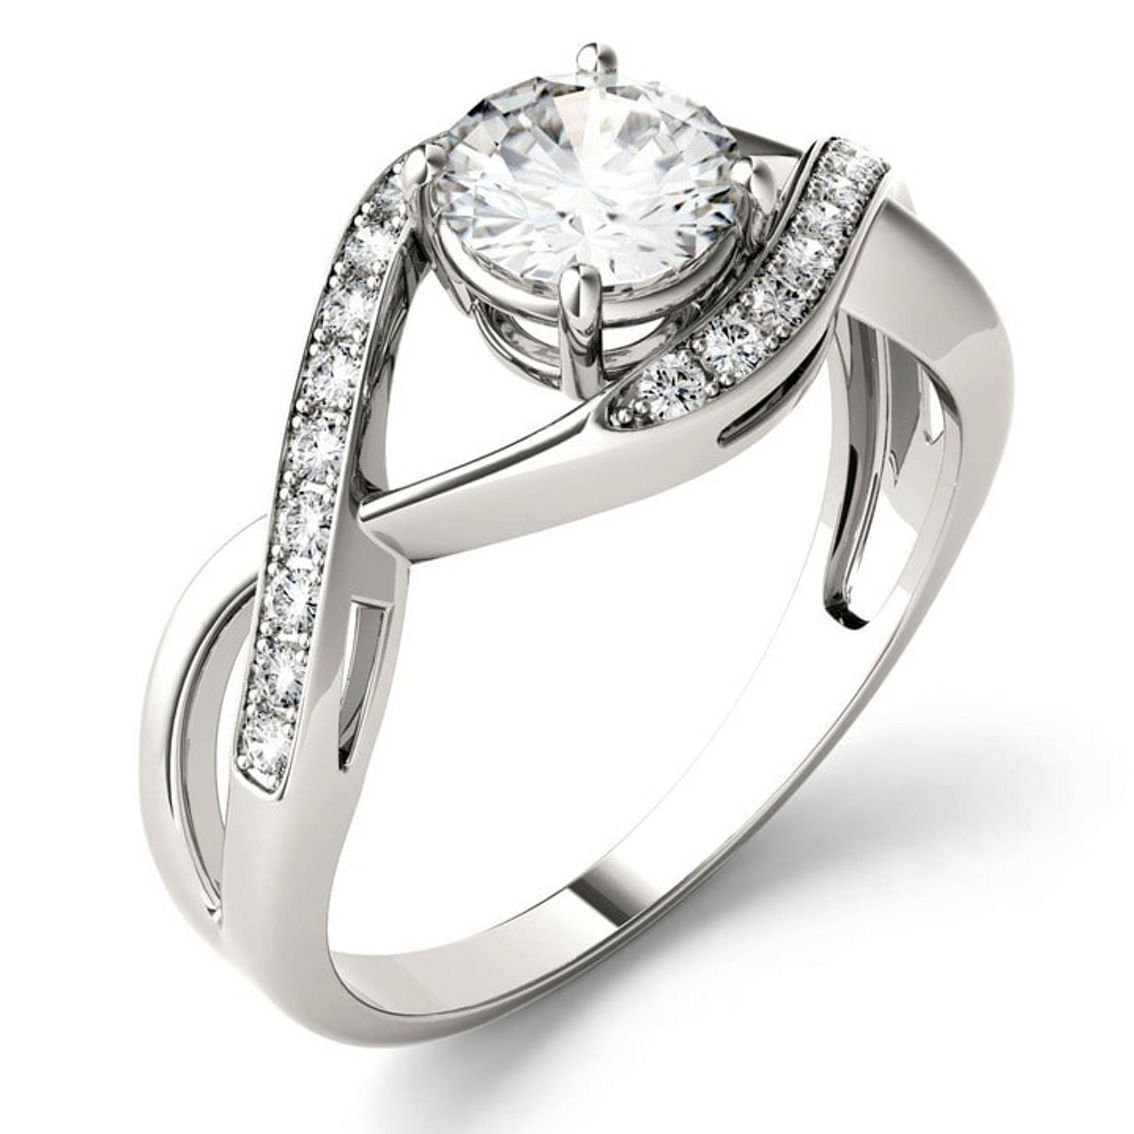 Charles & Colvard 1.02cttw Moissanite Round Engagement Ring in 14k White Gold - Image 2 of 5